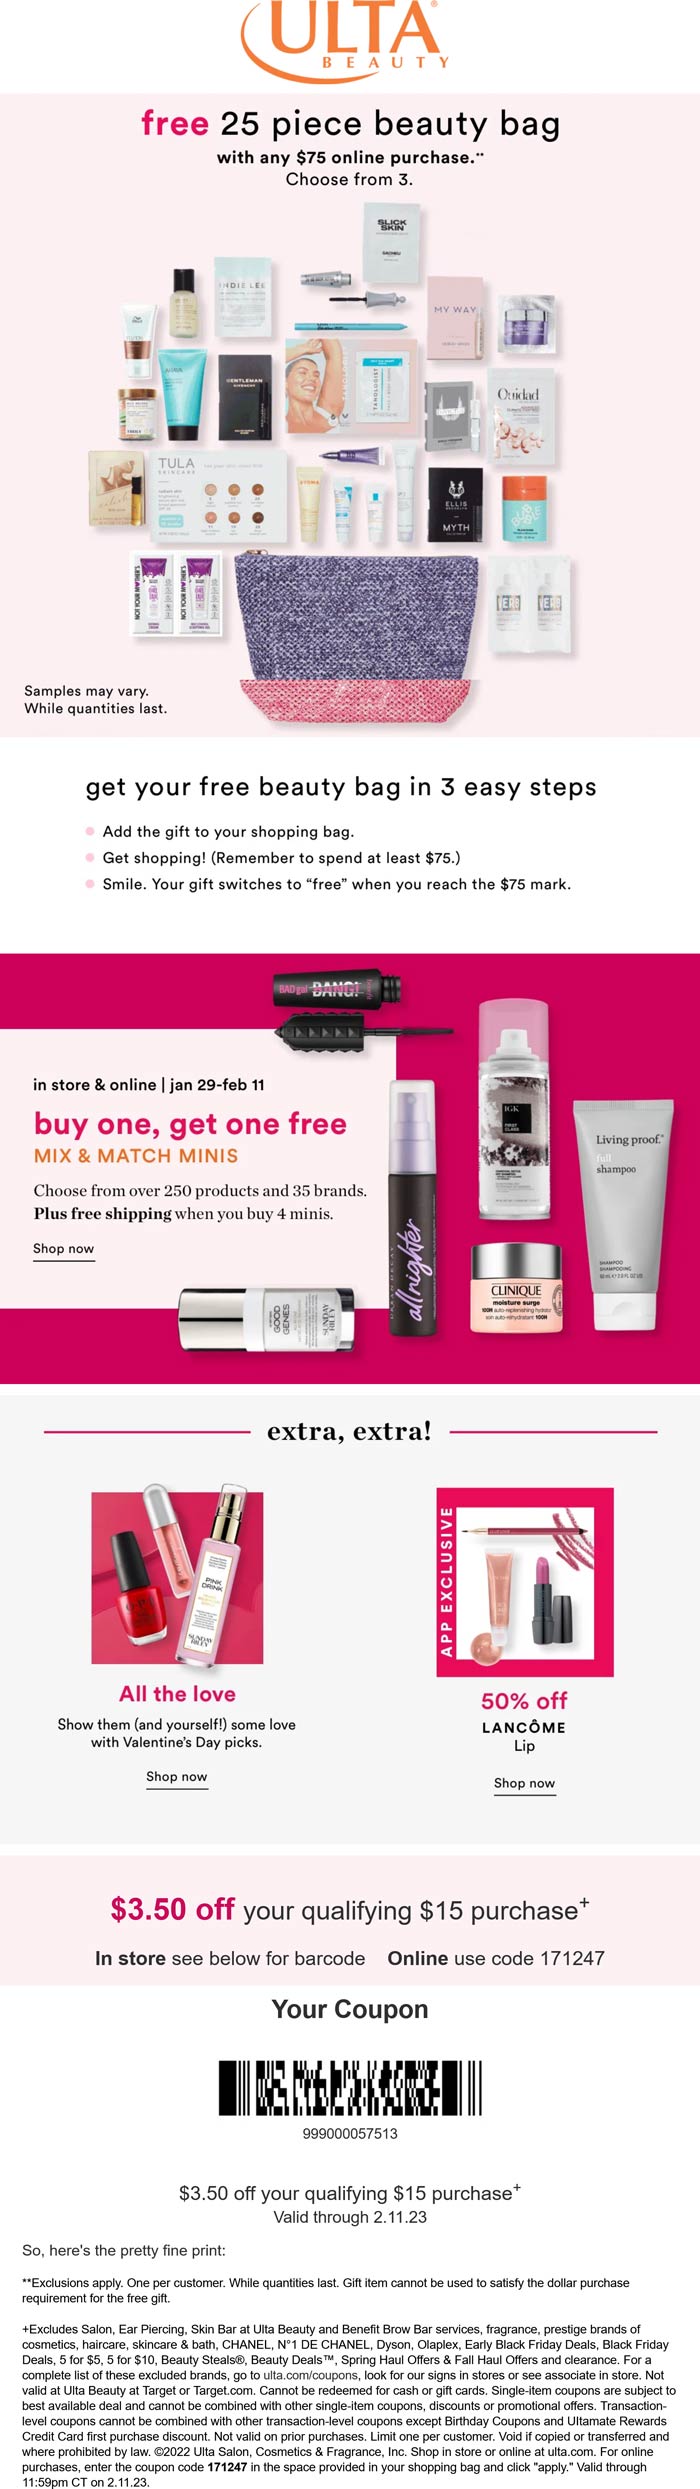 Ulta stores Coupon  Free 25pc kit on $75 + $3.50 off $15 today at Ulta Beauty via promo code 171247 #ulta 